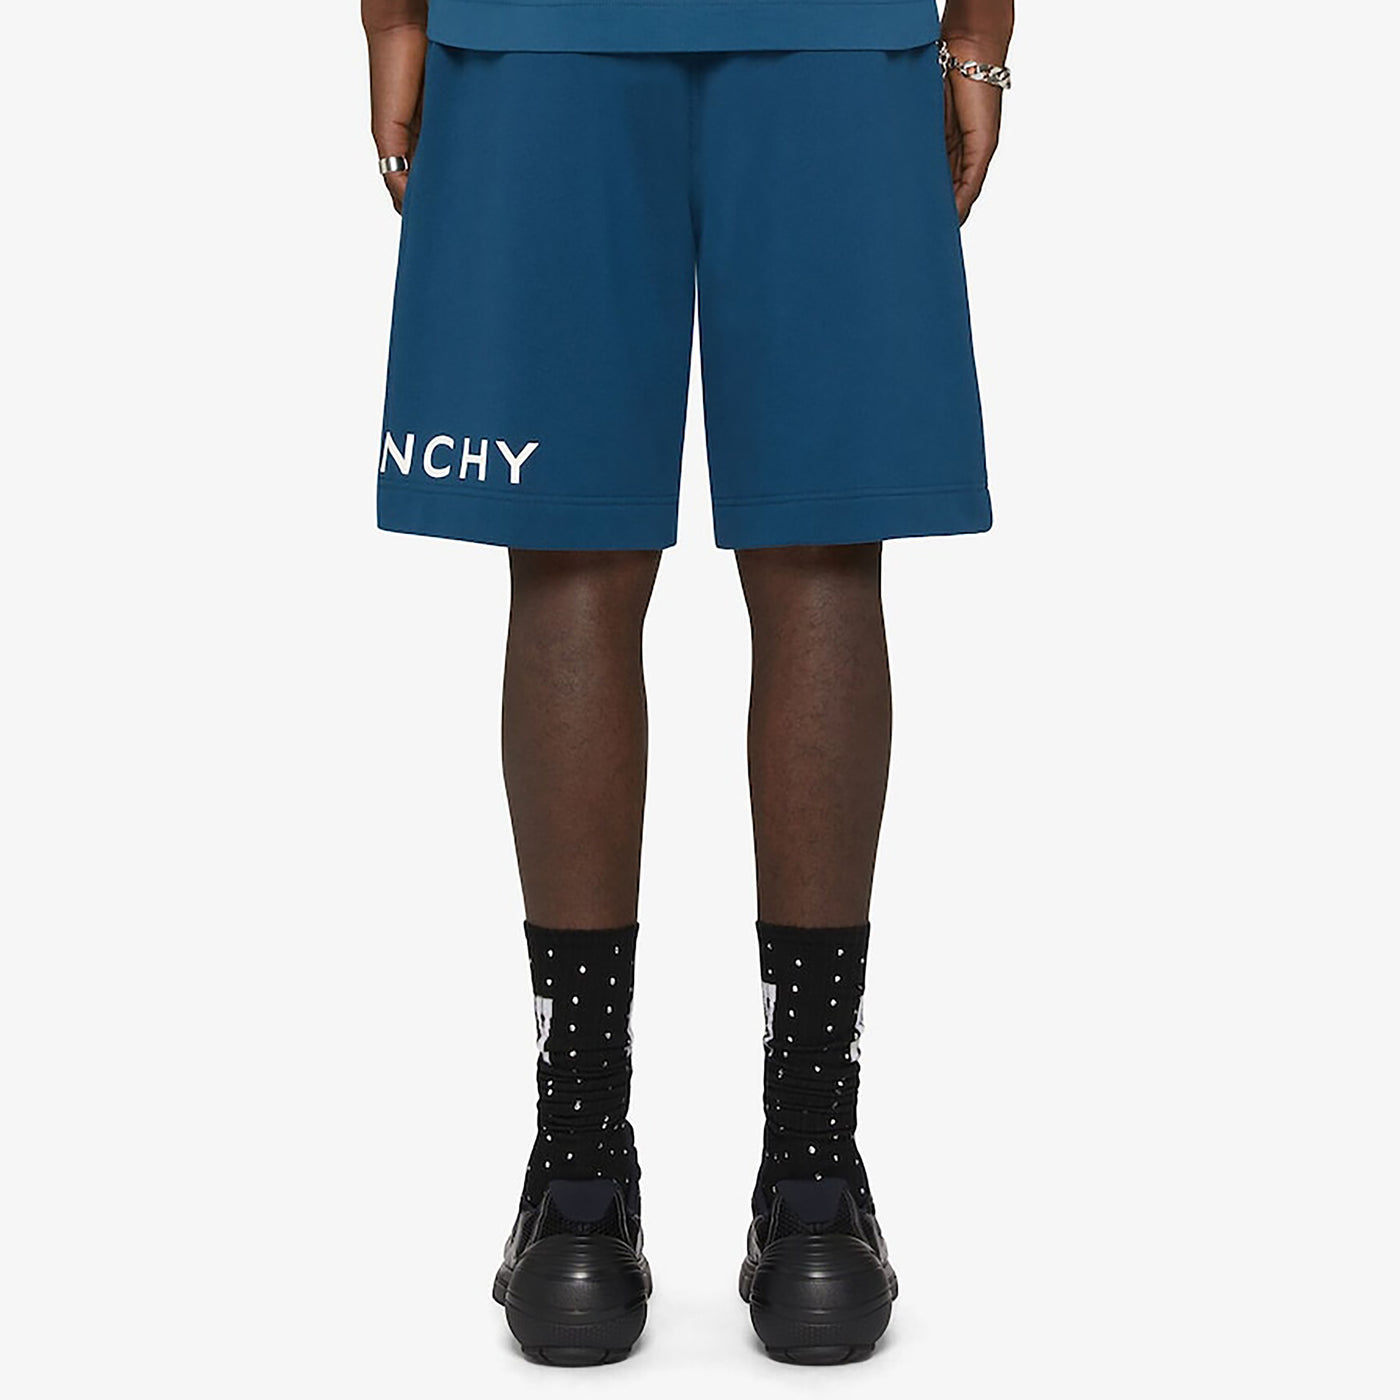 Givenchy Archetype Bermuda Shorts